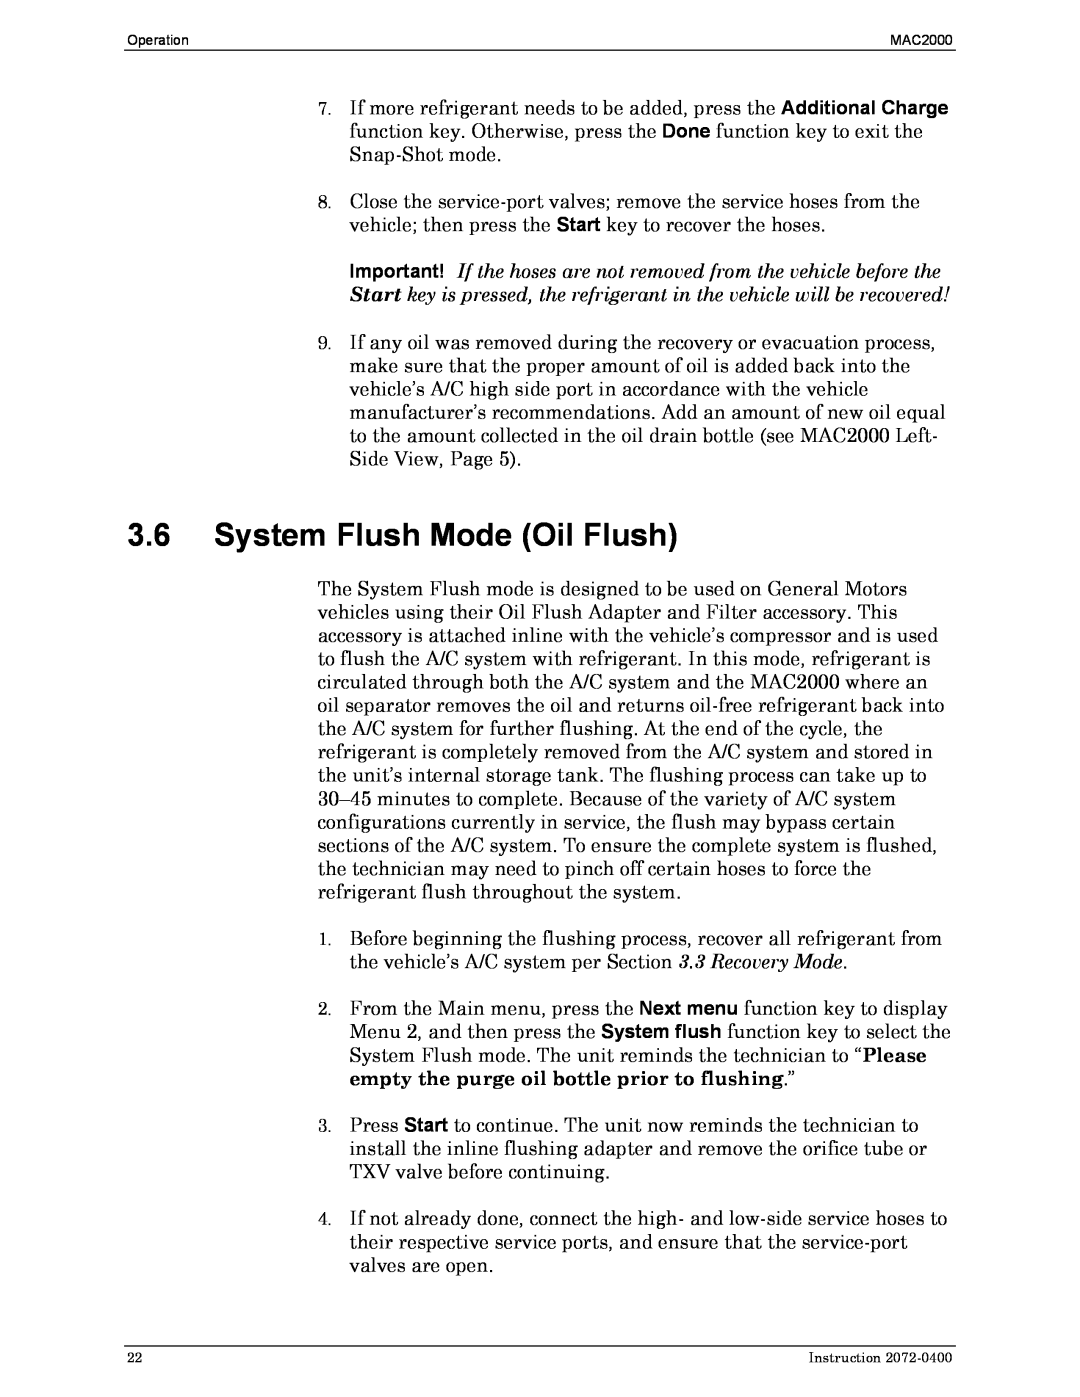 Bacharach 2072-0400 manual 3.6System Flush Mode Oil Flush 